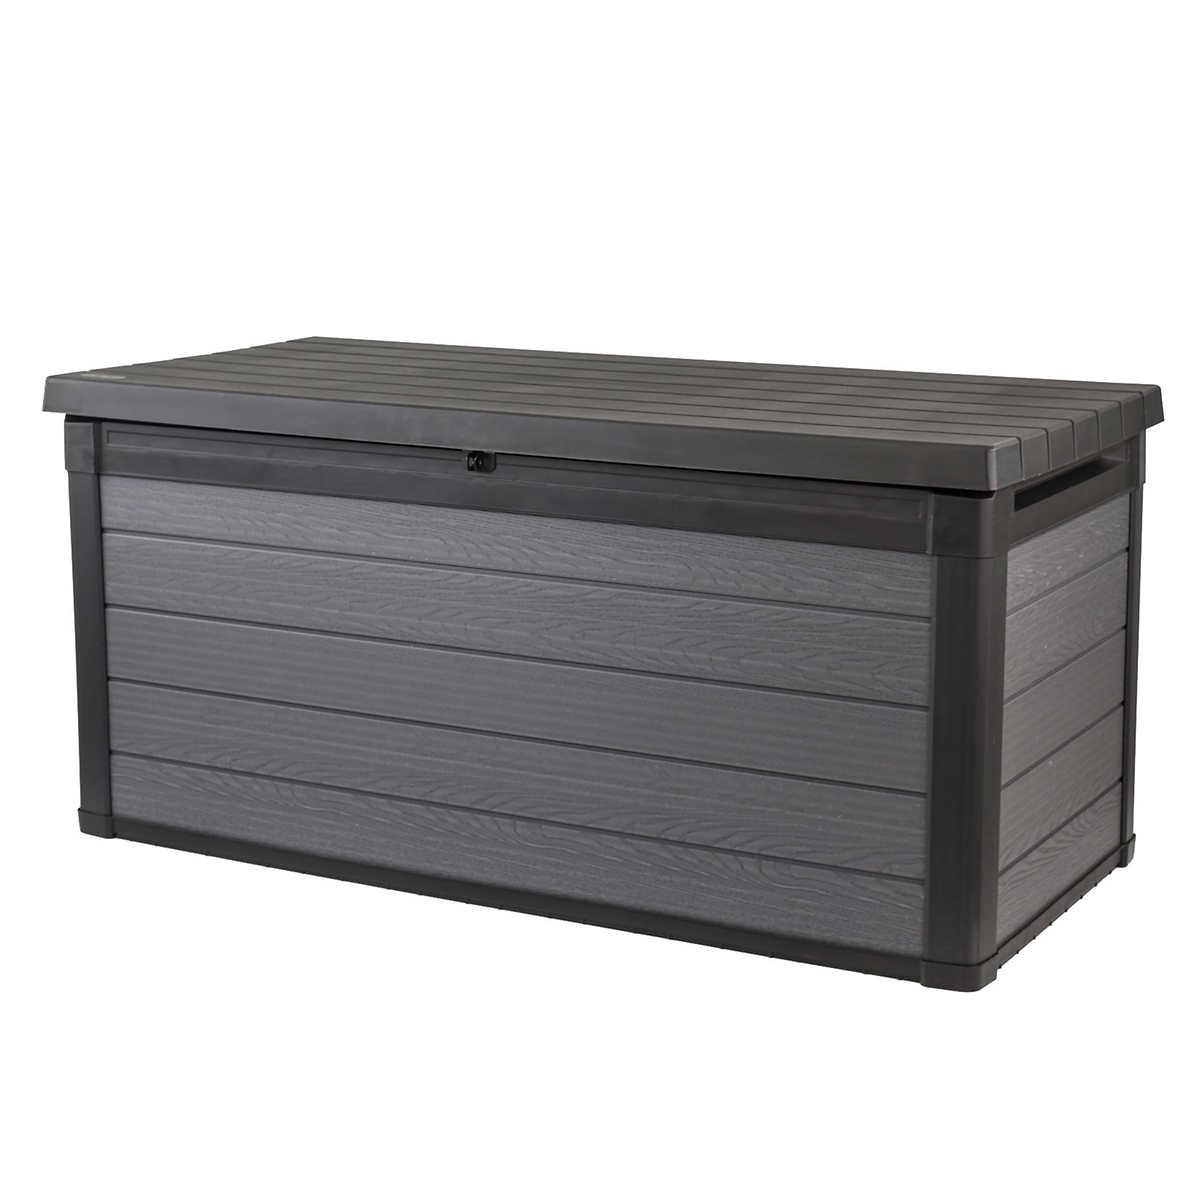 Monte Deck-Box Deckbox Ultra Pro Deck Box Side-Loading Pit Lord 